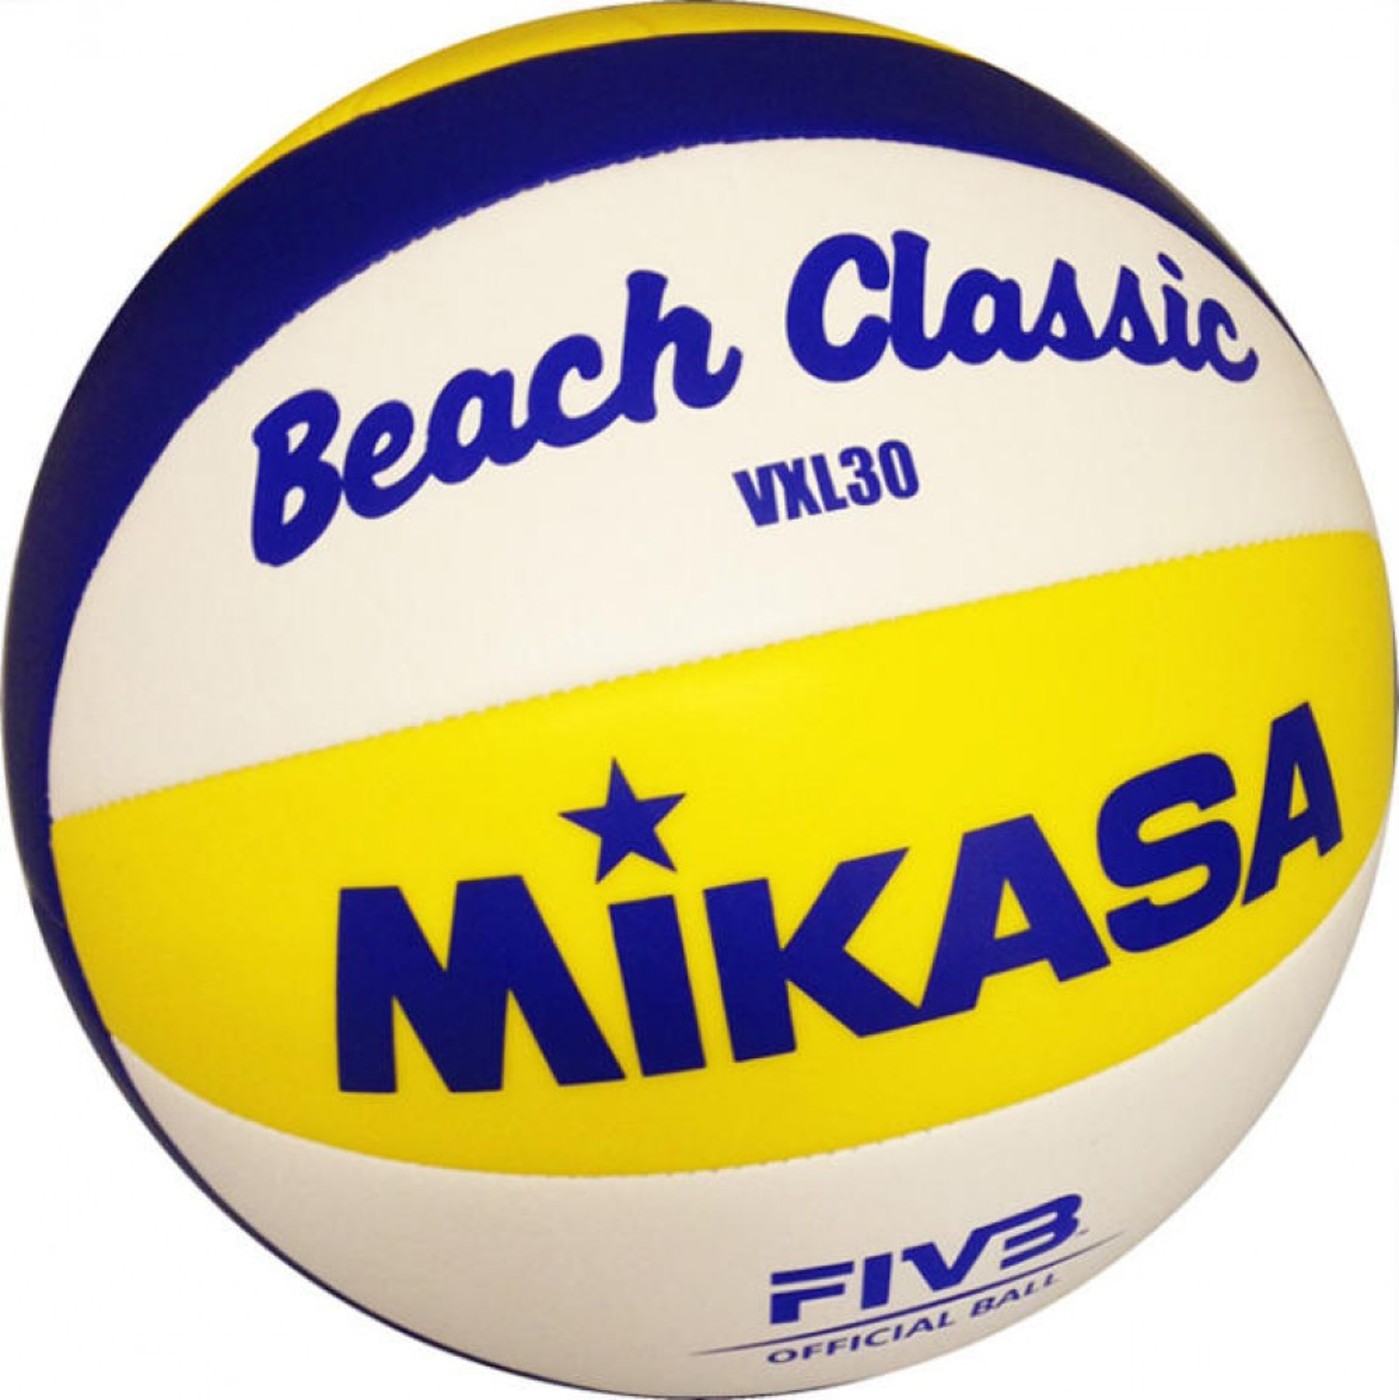 MIKASA Beachvolleyball VXL30